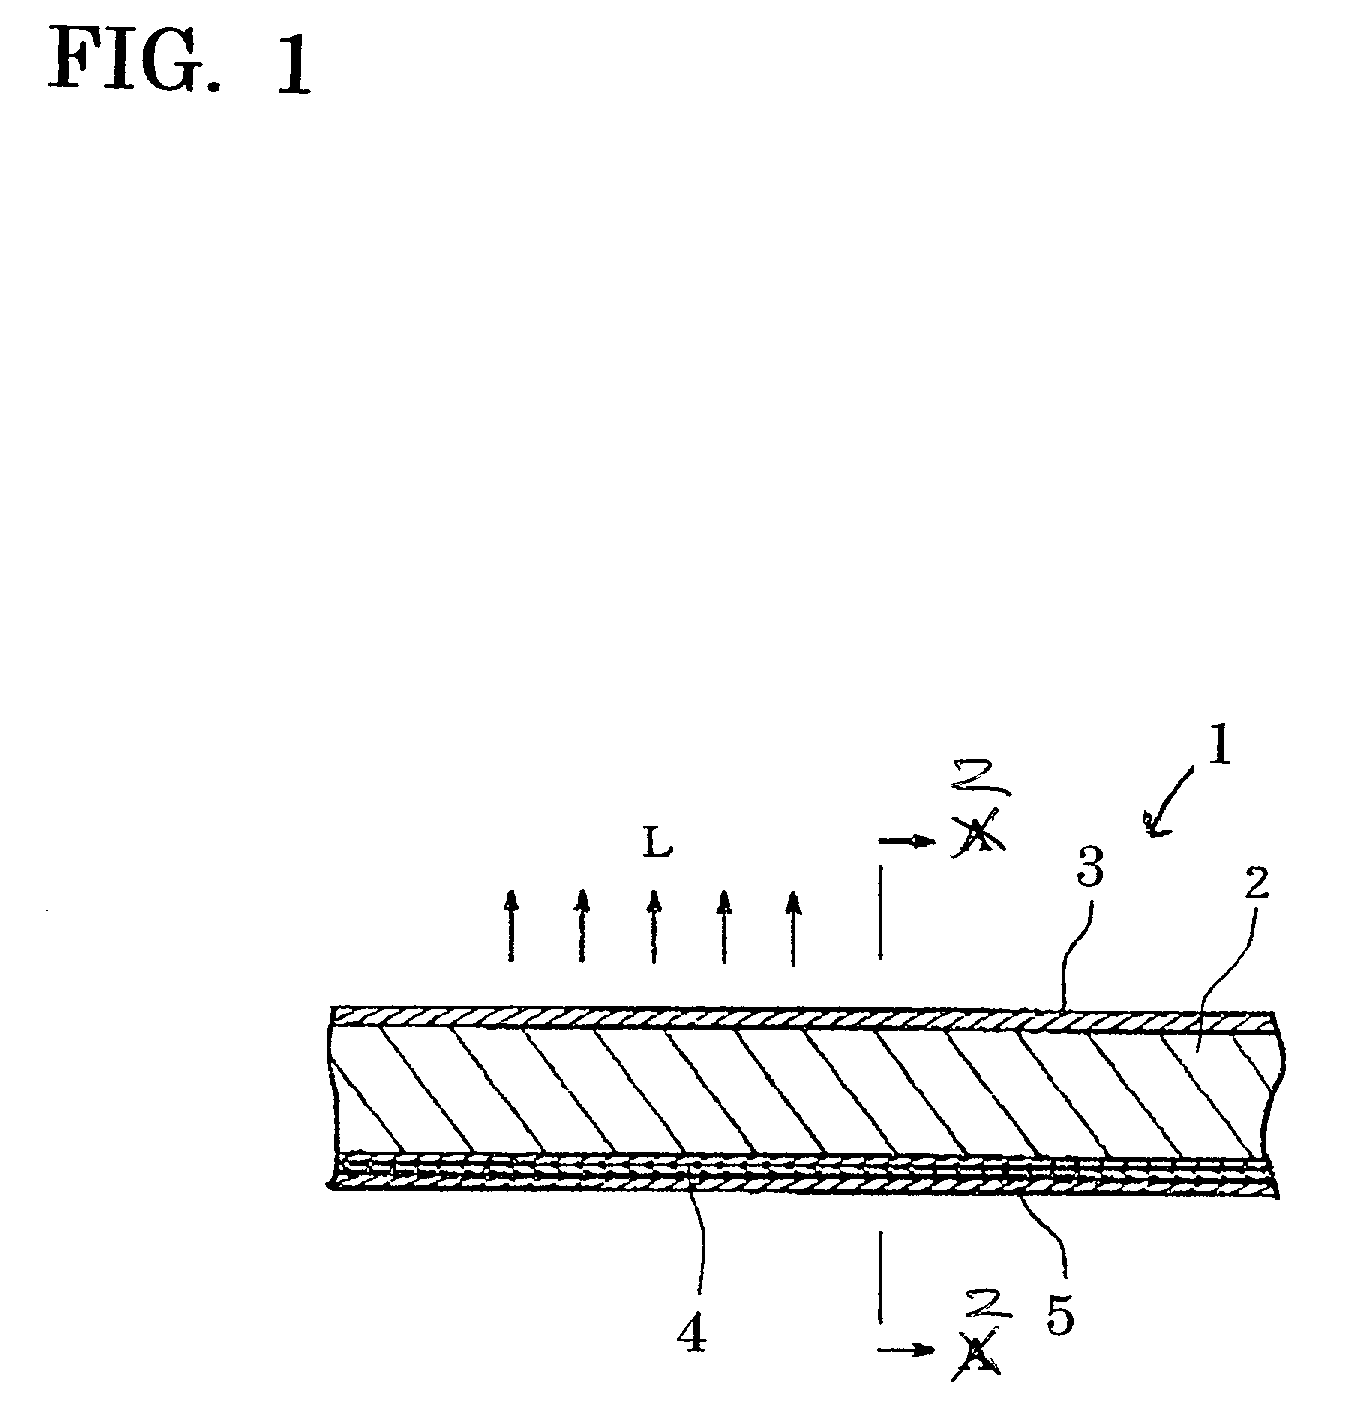 Method of manufacturing light transmission tubes